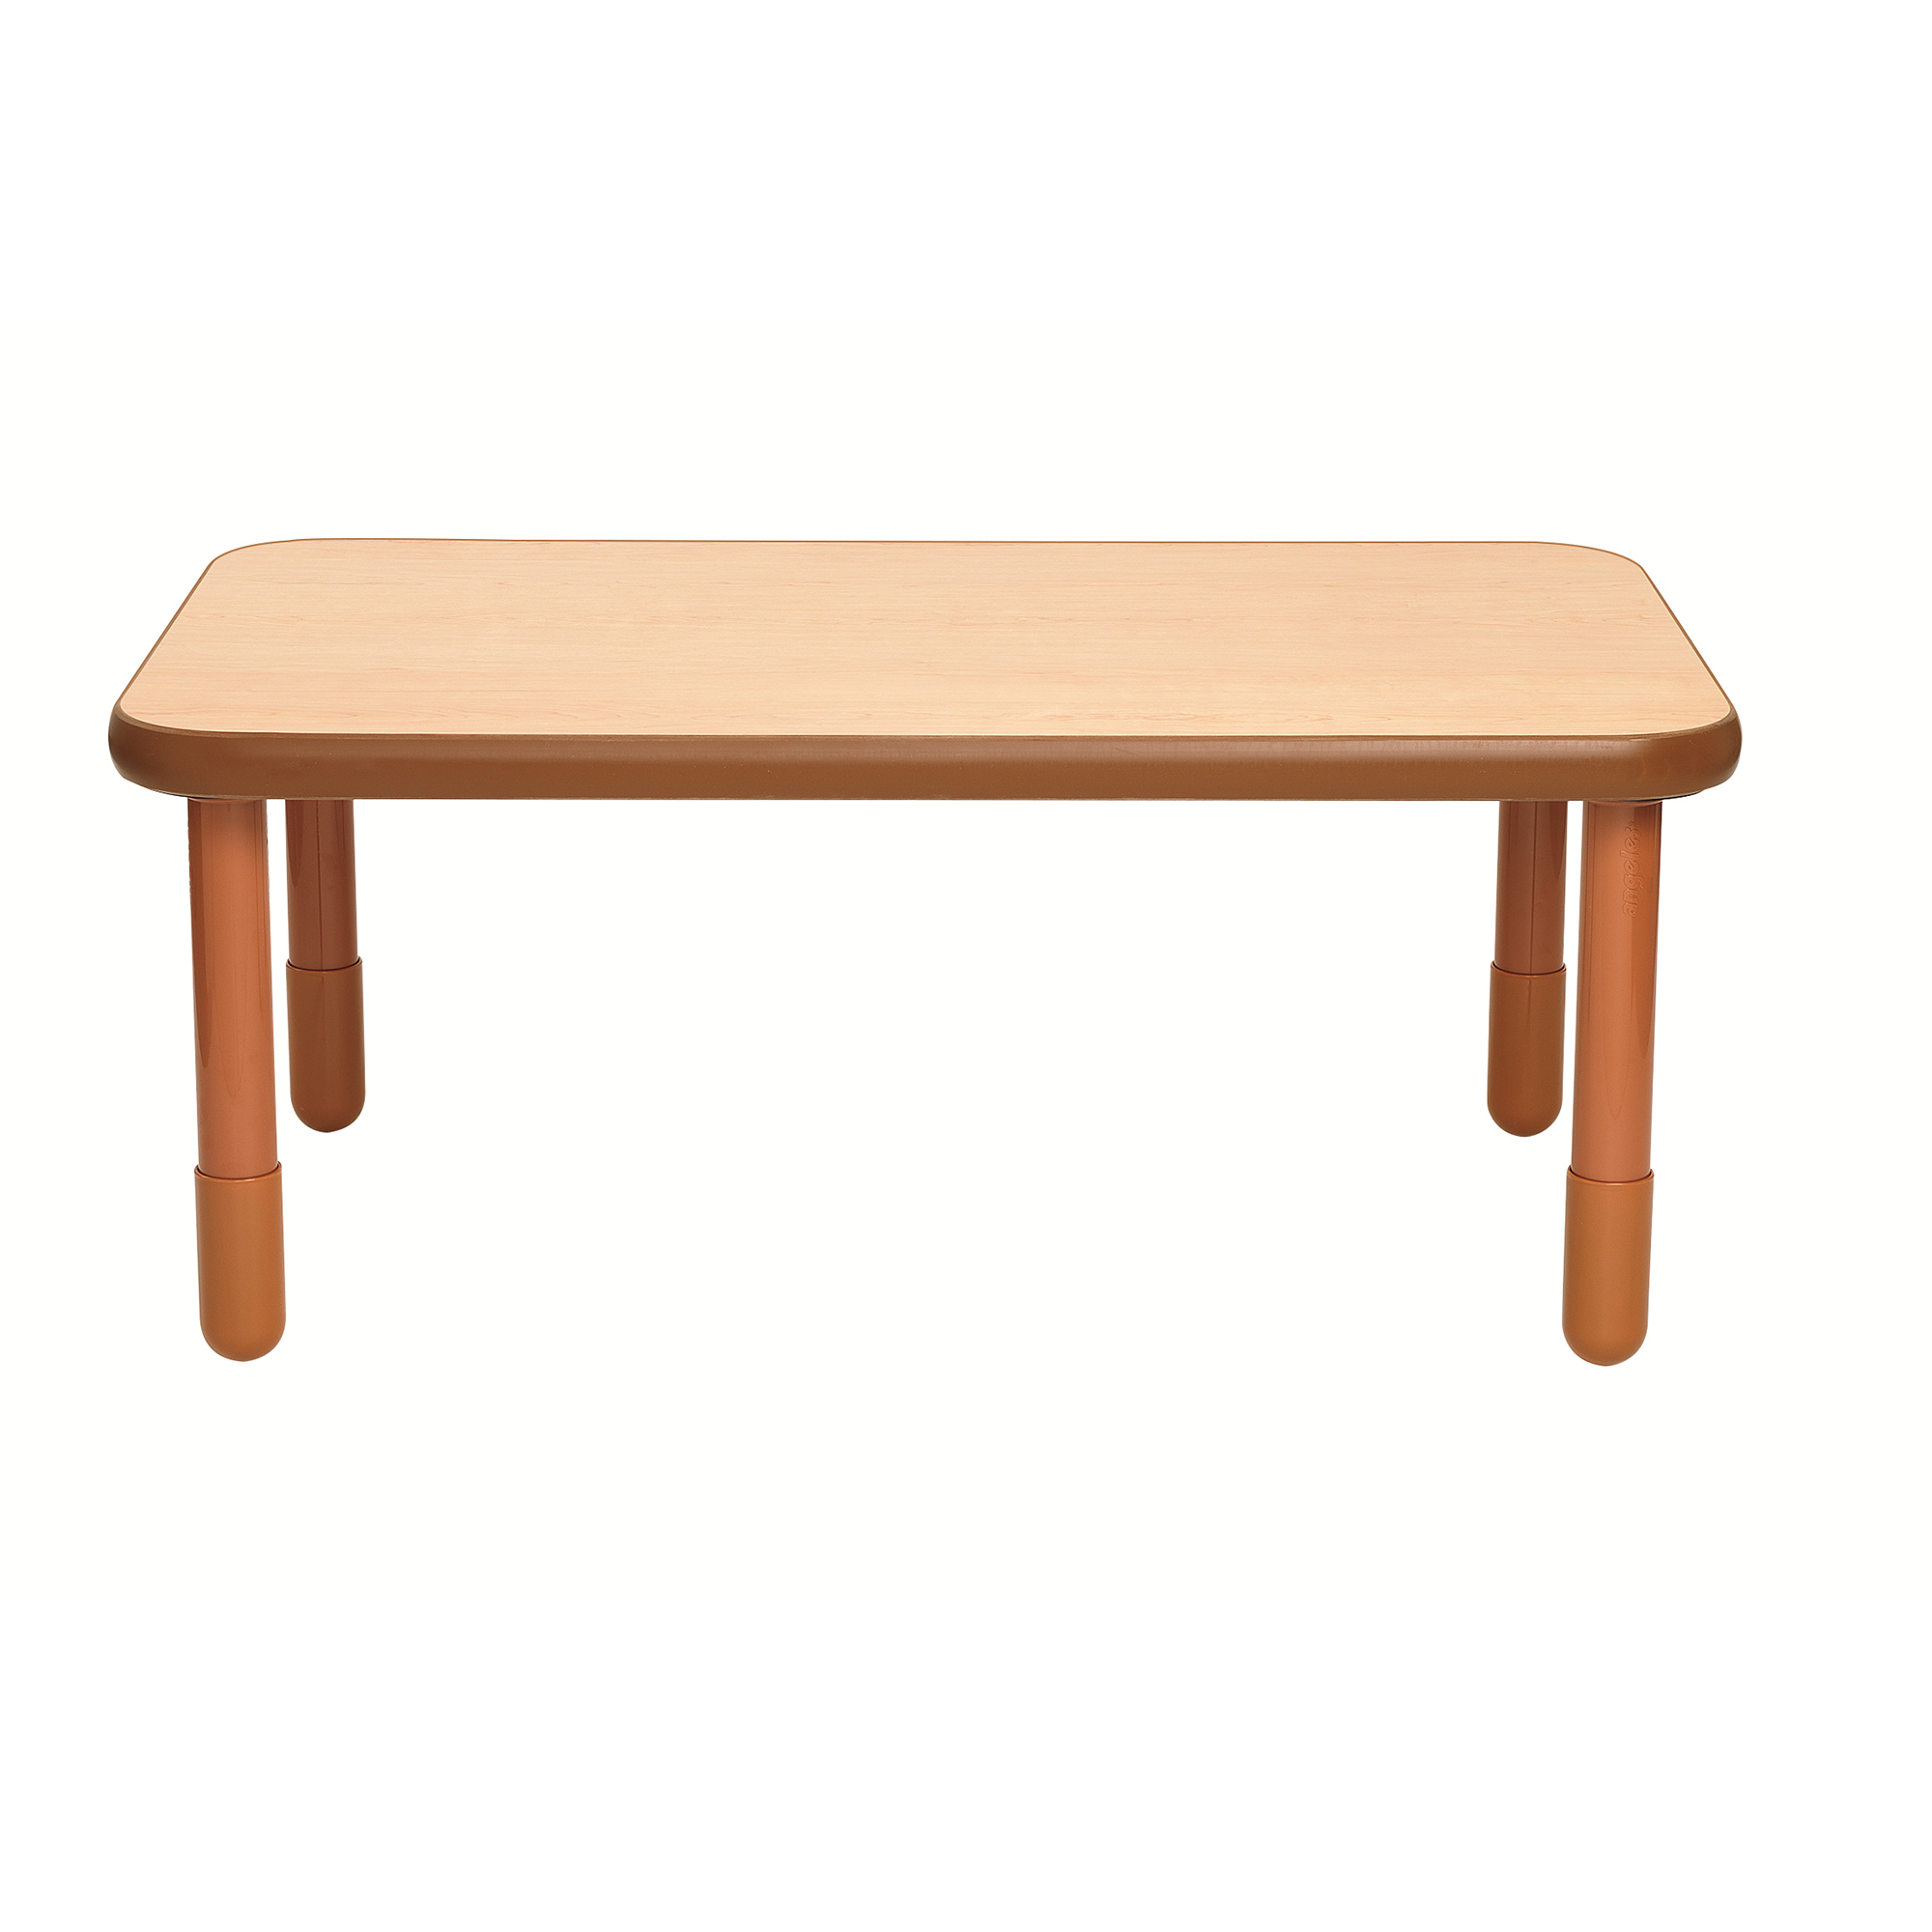 BaseLine® 122 cm  x 76 cm  Rectangular Table - Natural Wood with 51 cm  Legs